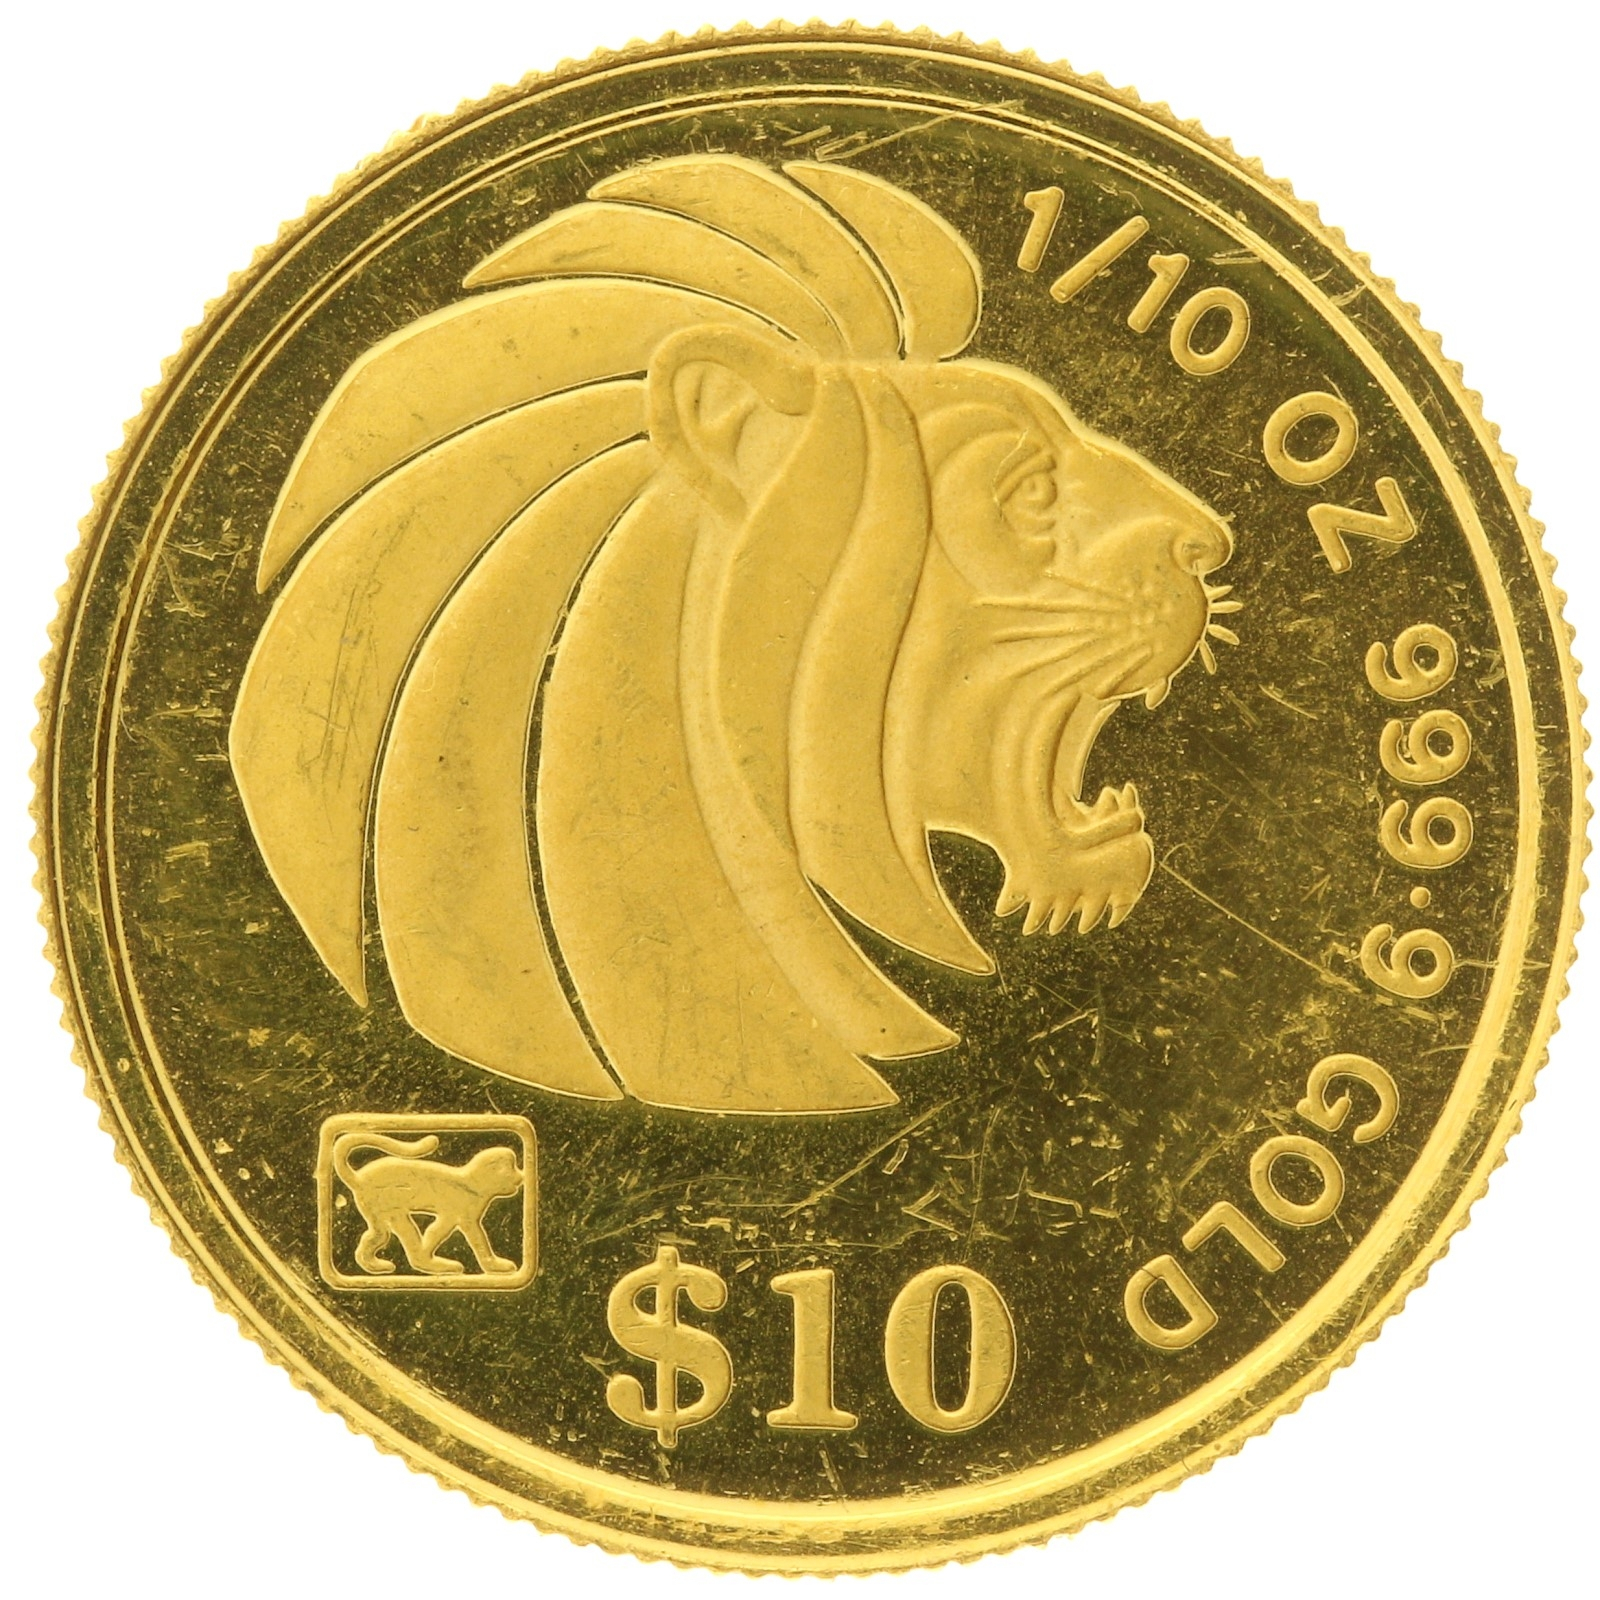 Singapore - 10 dollars - 1992 - Lion - 1/10oz